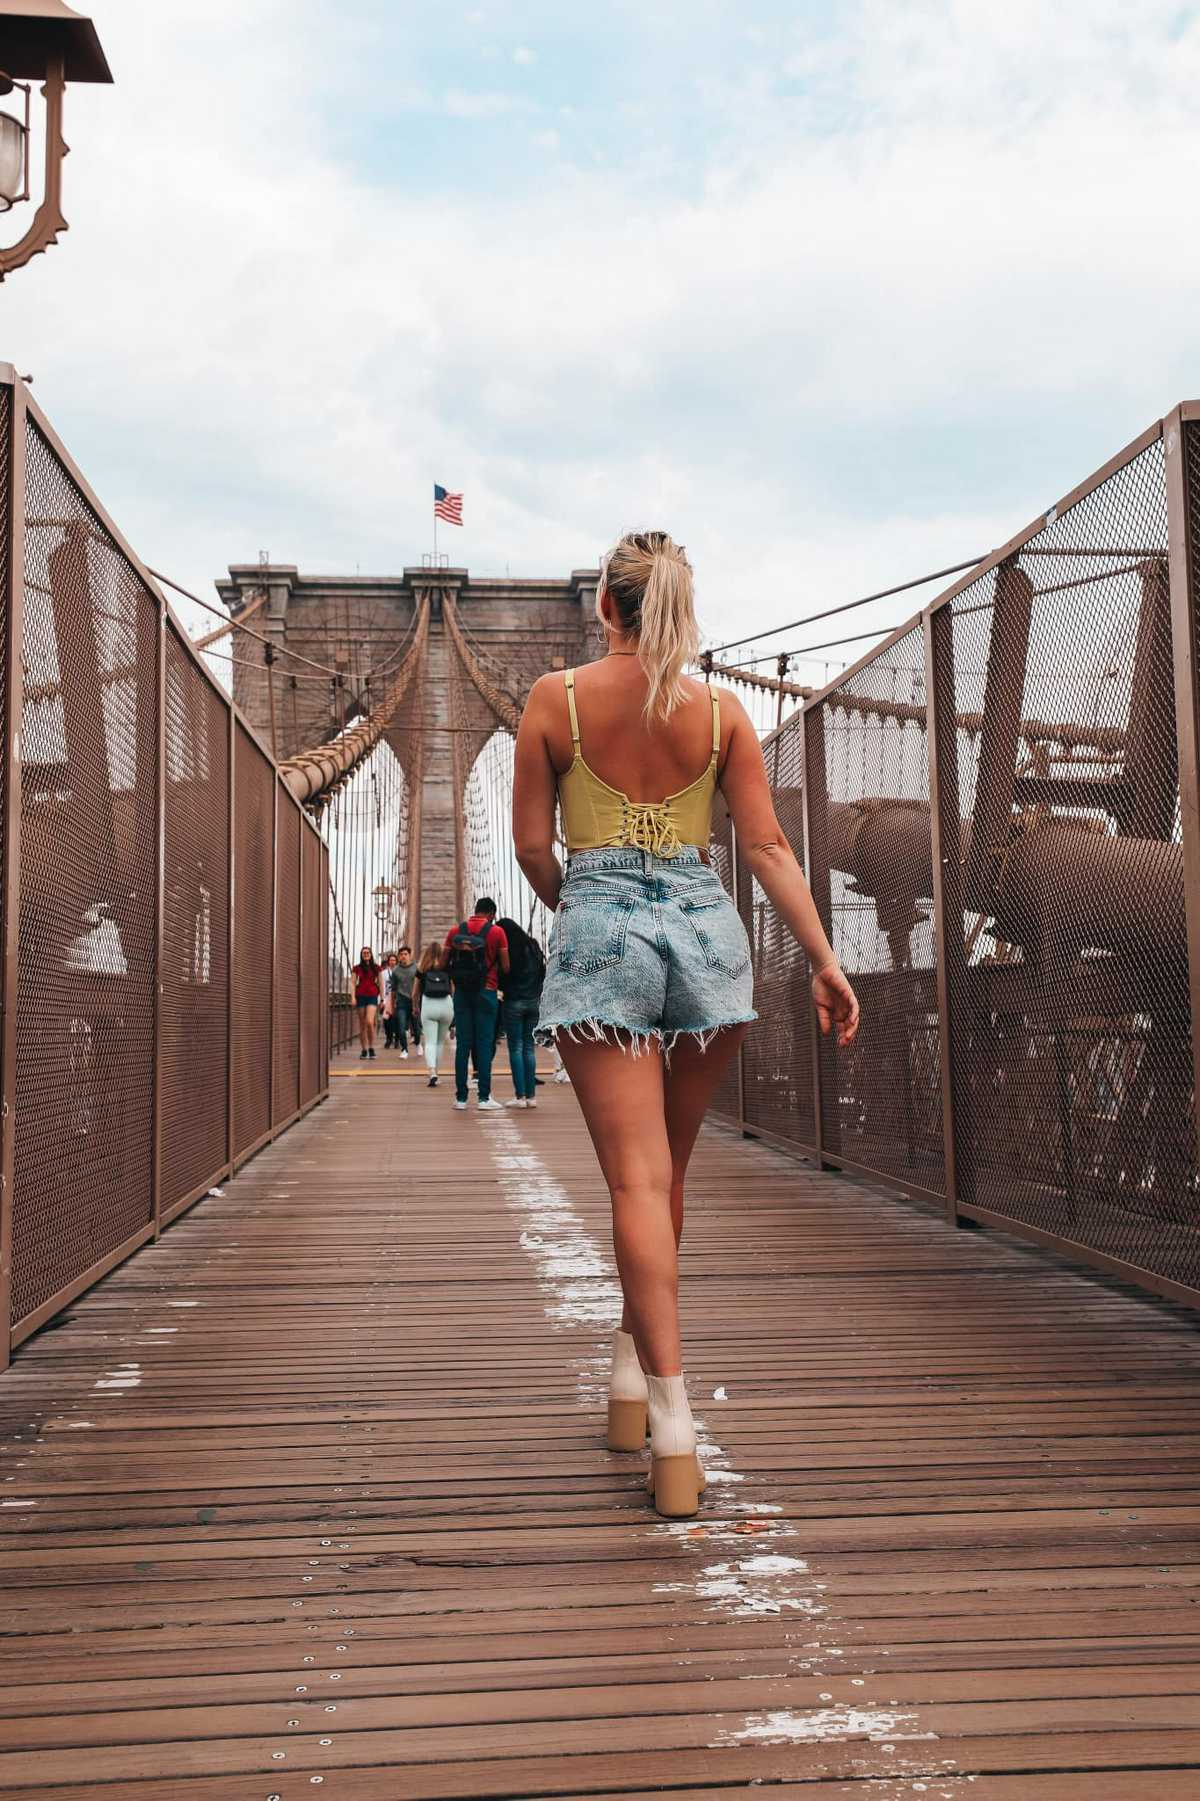 Brooklyn Bridge photo inspo in NYC